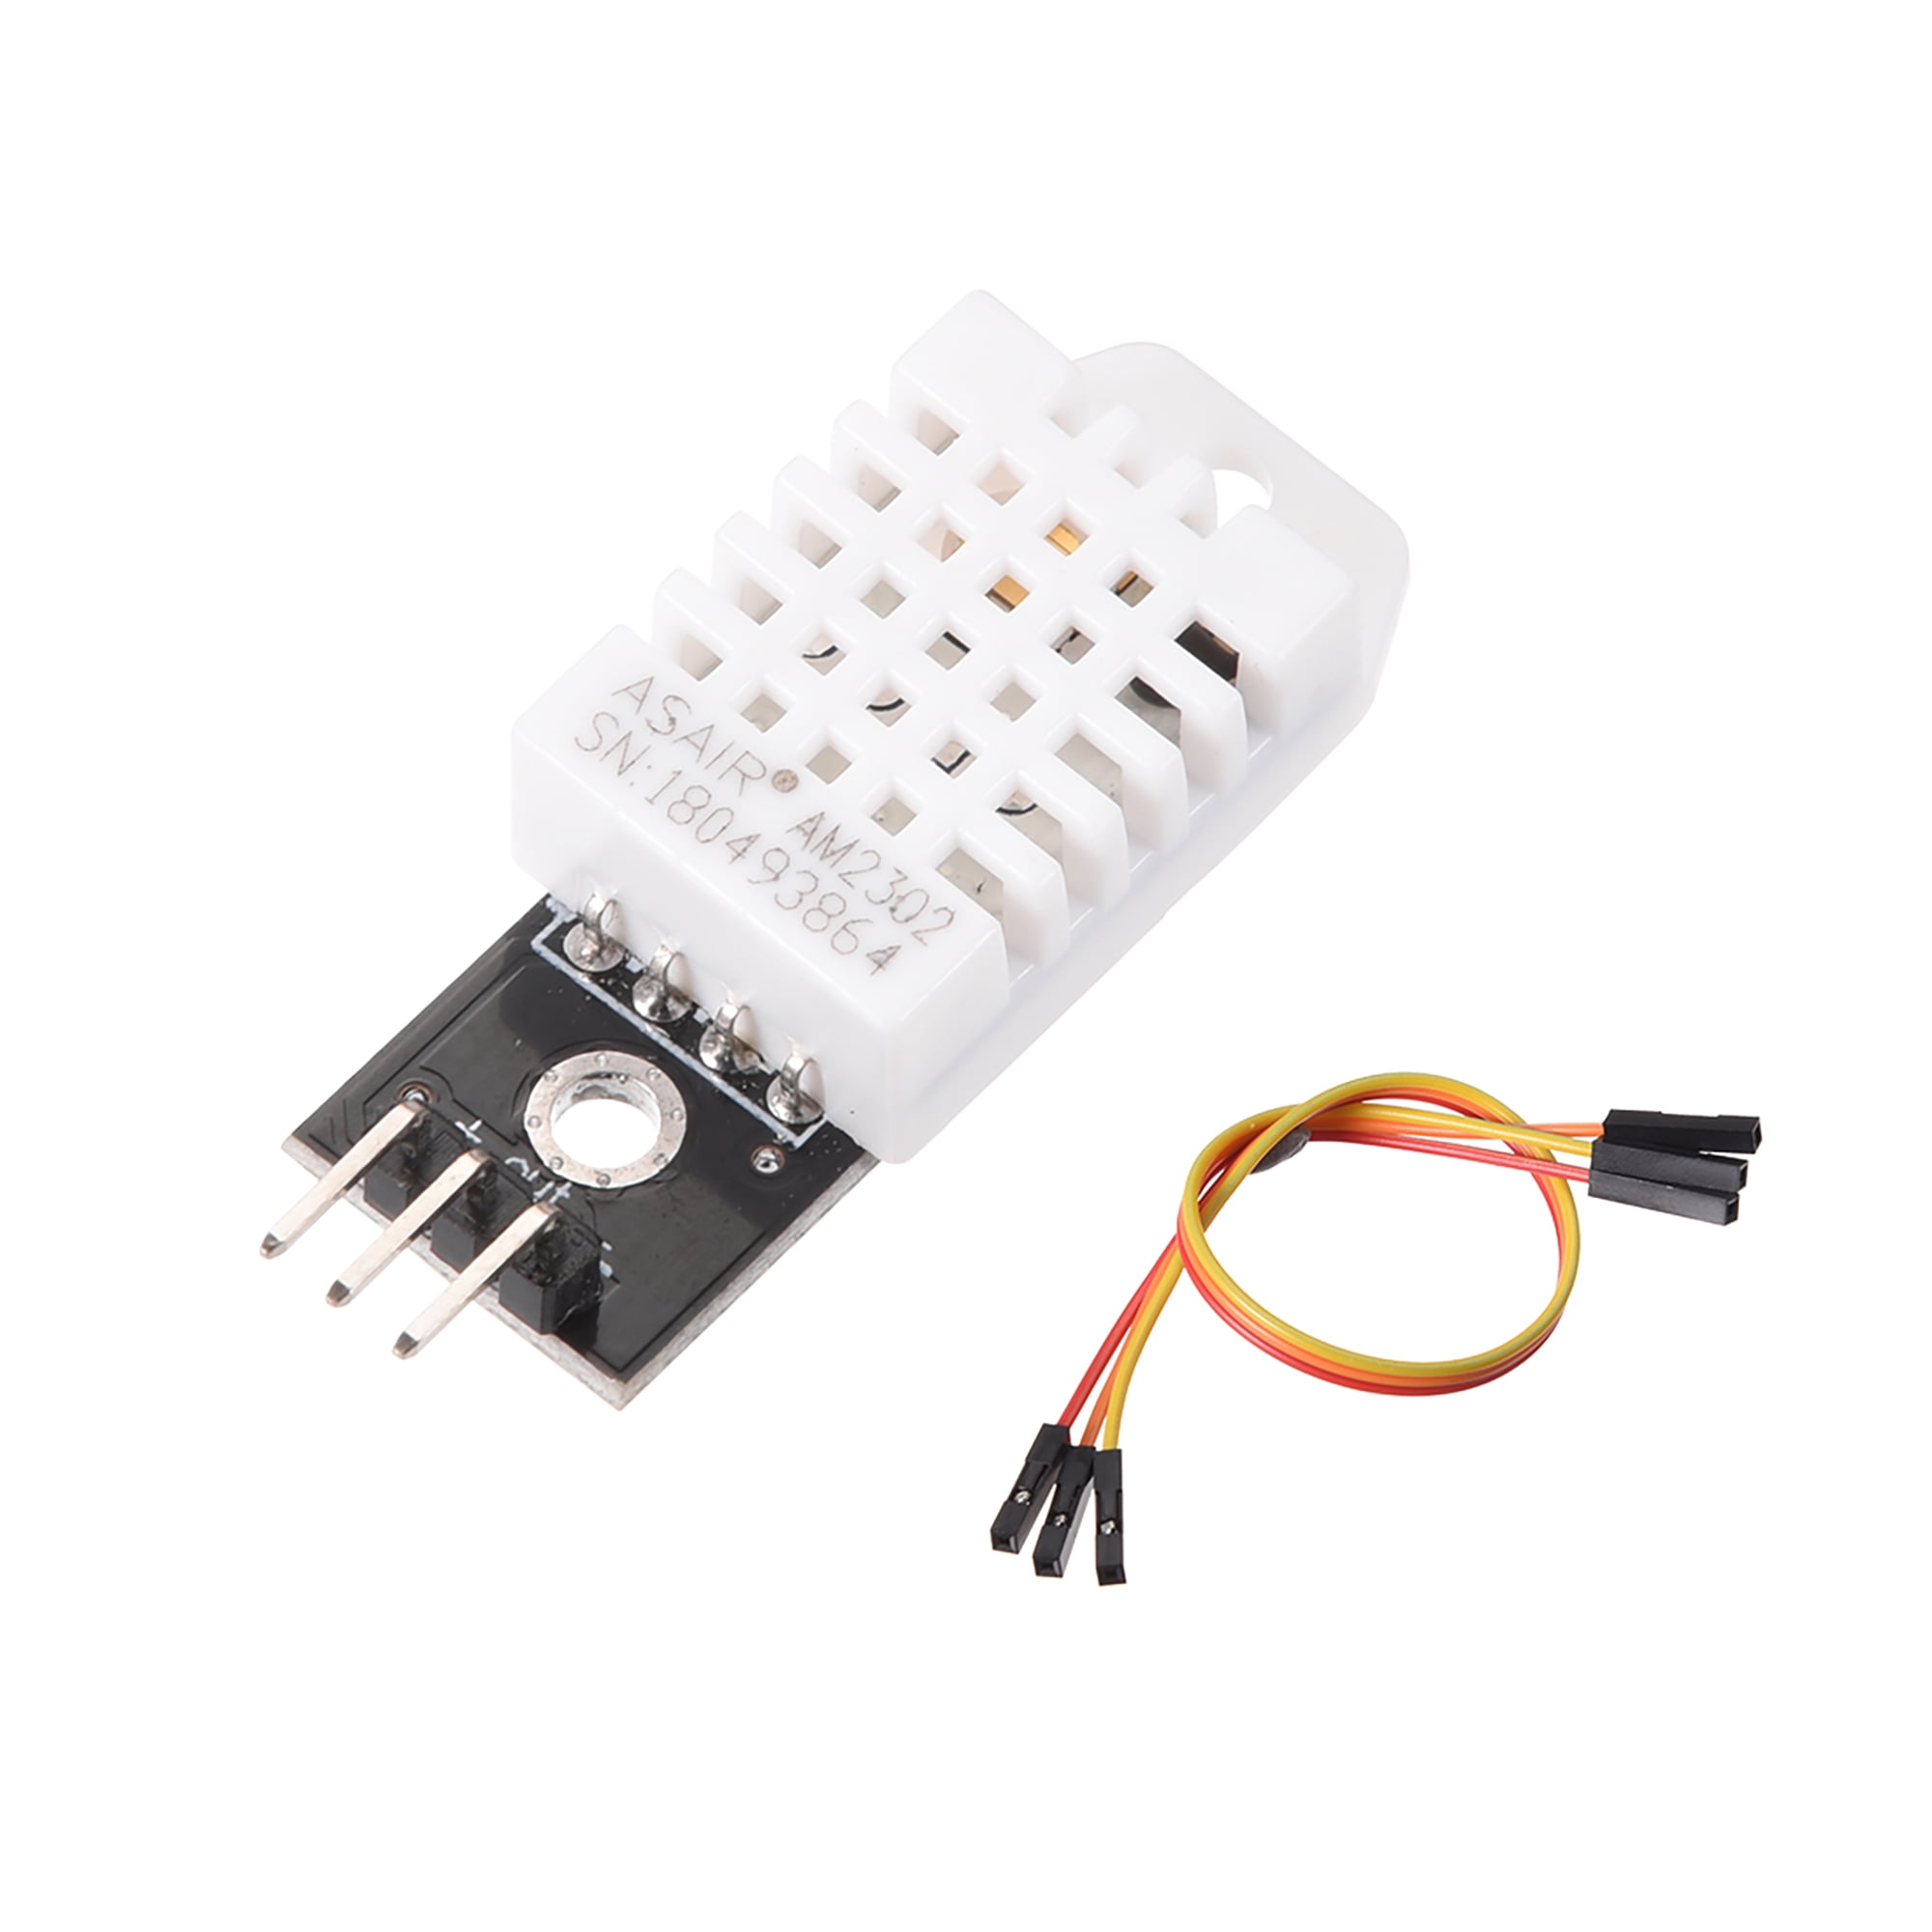 DHT22/AM2302 Digital Temperature and Humidity Measure Sensor Module for Arduino